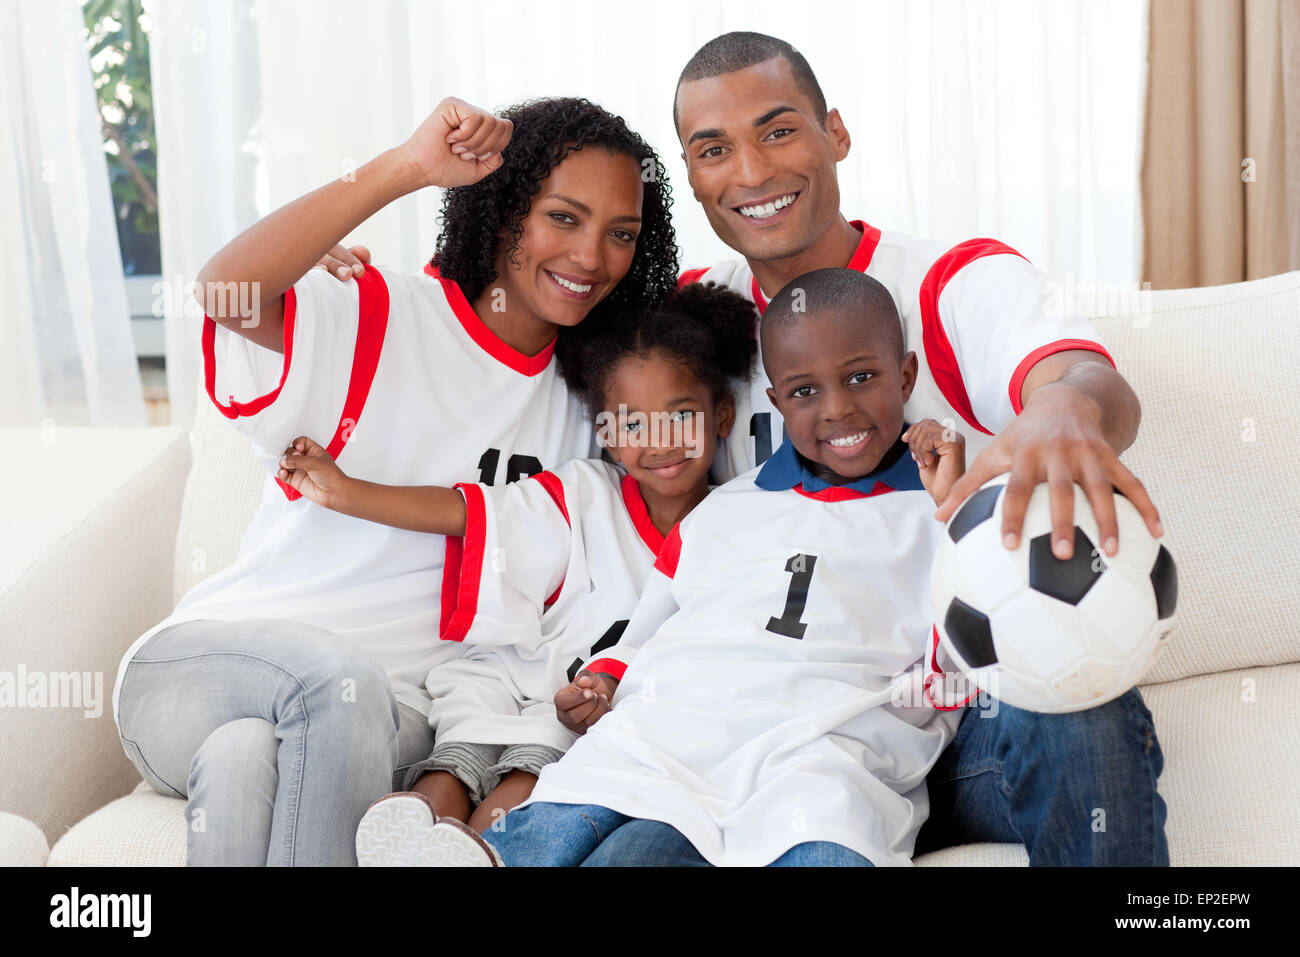 Afro-American family celebrating a football goal Stock Photo